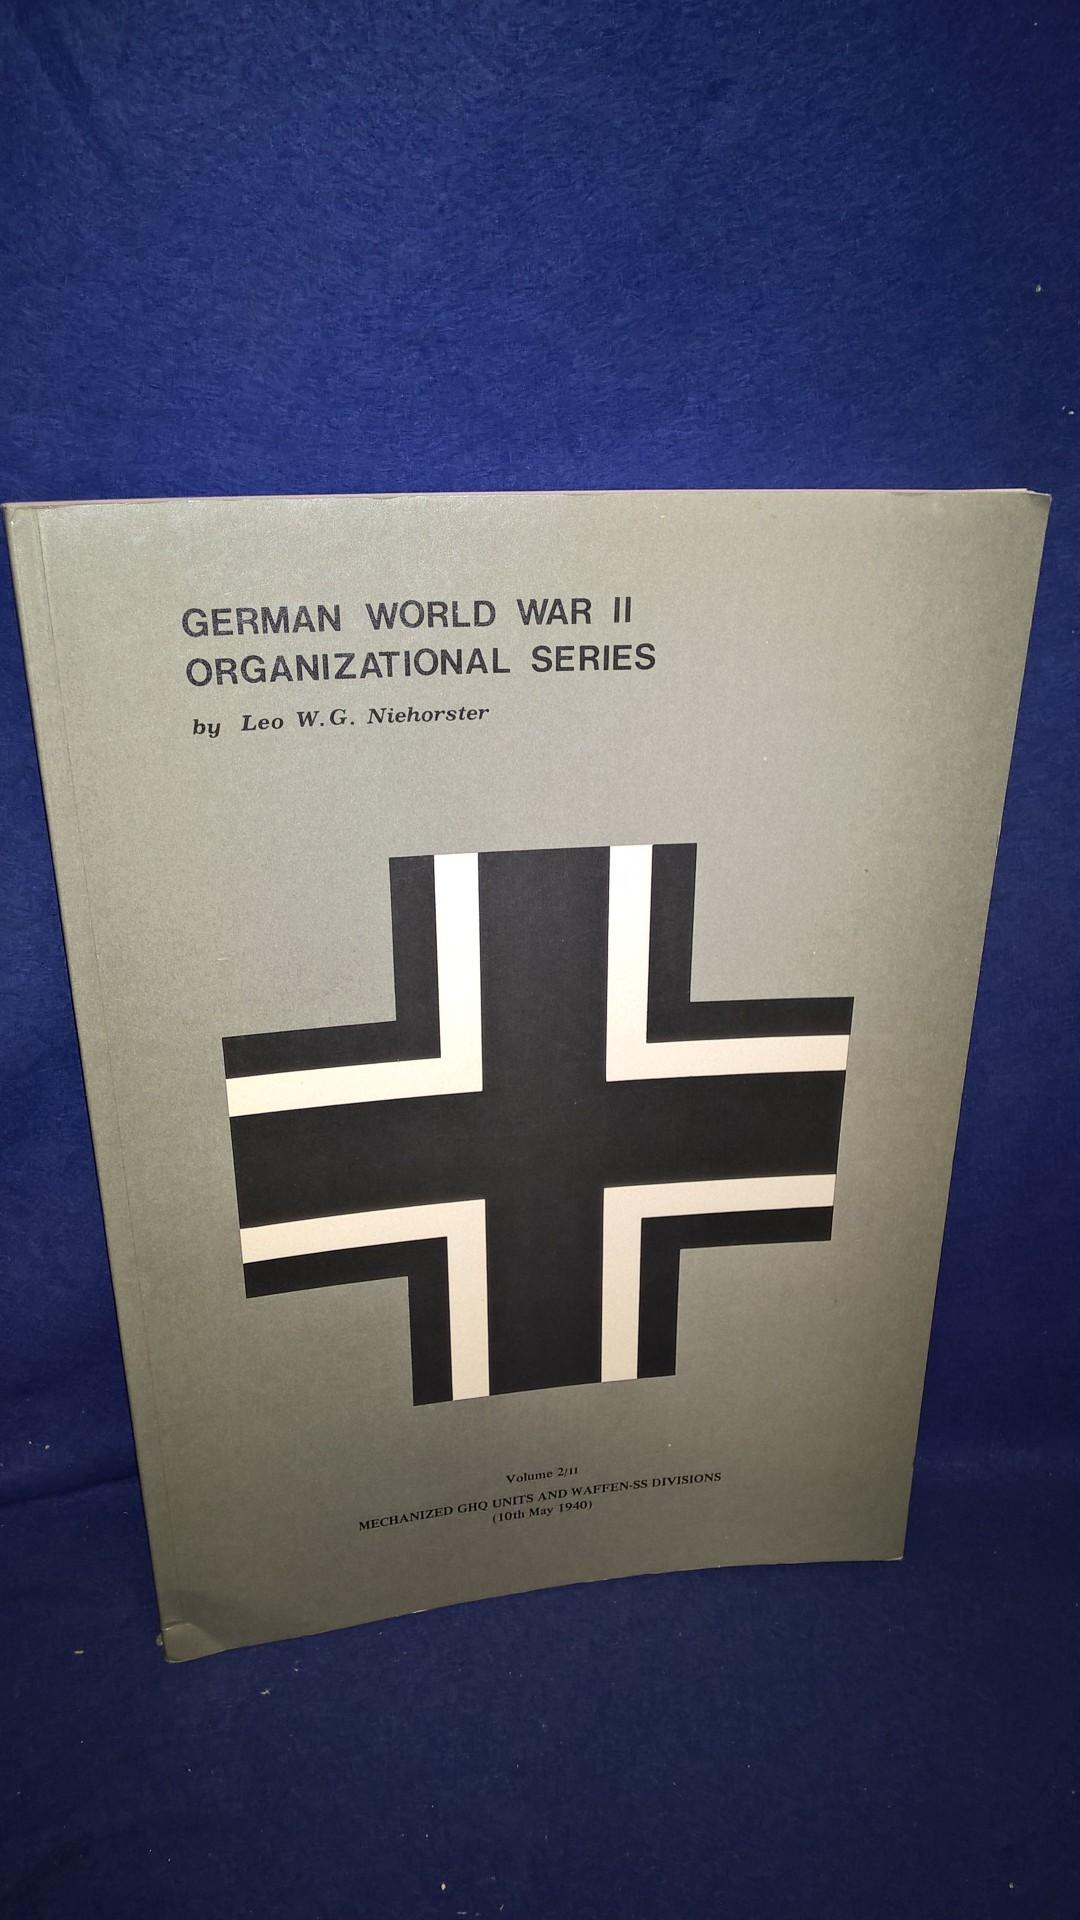 GERMAN WORLD WAR II ORGANIZATIONAL SERIES.Volume 2/II Mechanized GHQ Units and Waffen-SS Divisions 10 May 1940.